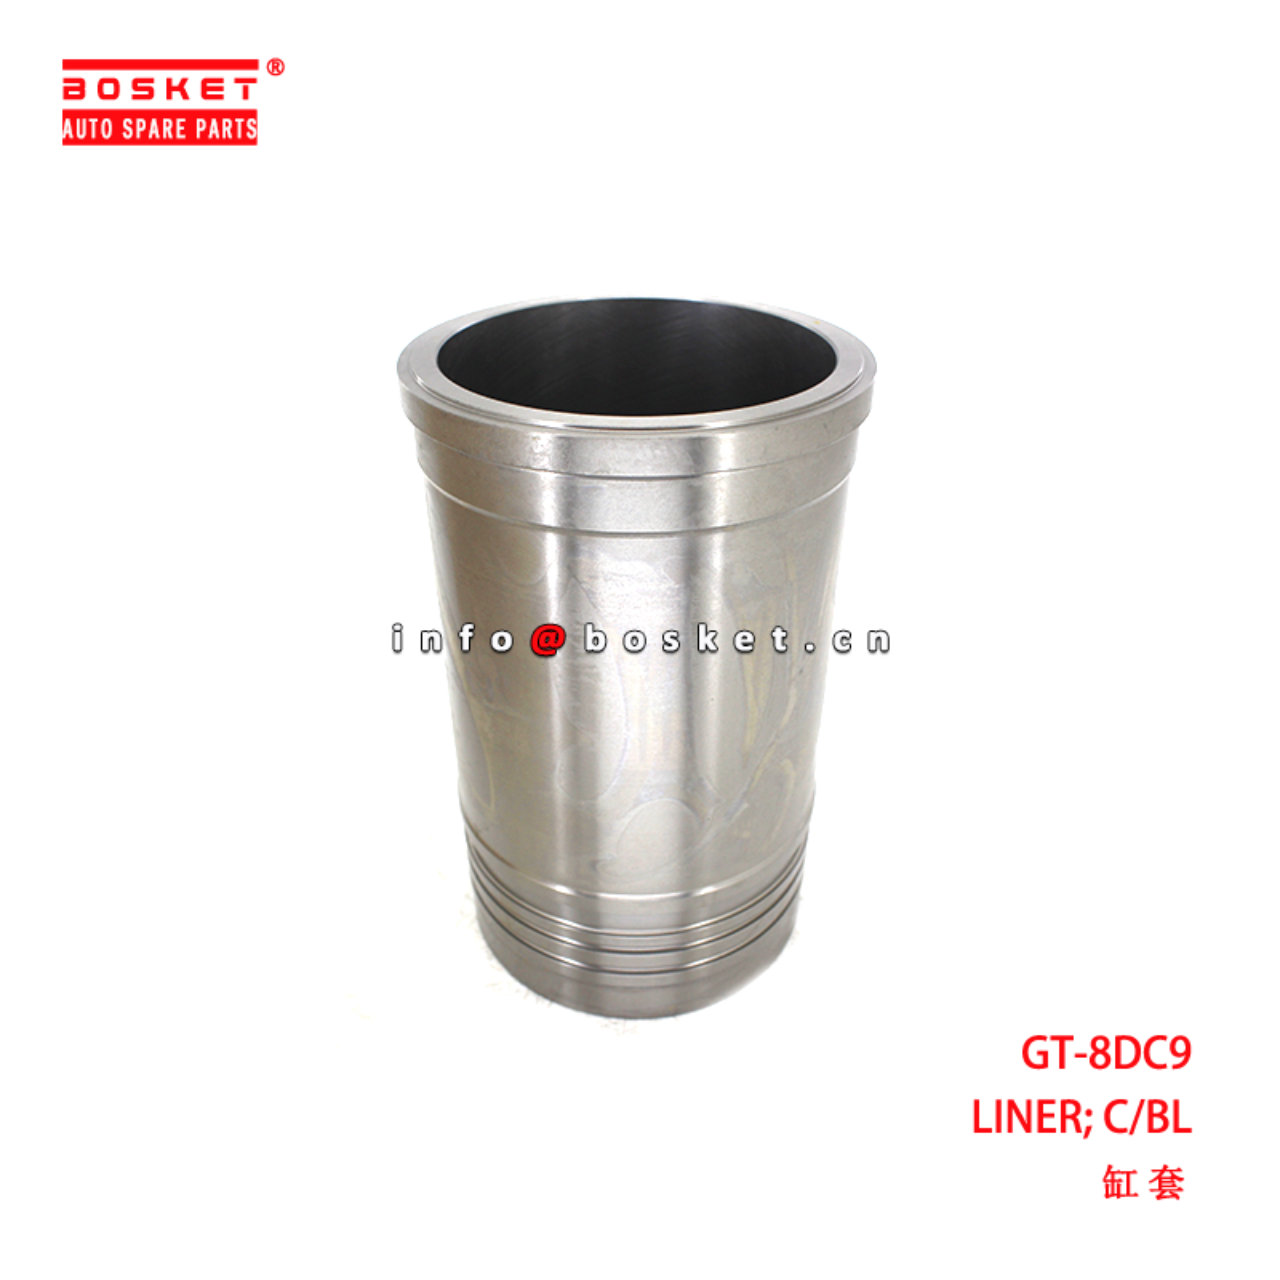 GT-8DC9 Cylinder Block Liner suitable for ISUZU  8DC9 GT-8DC9